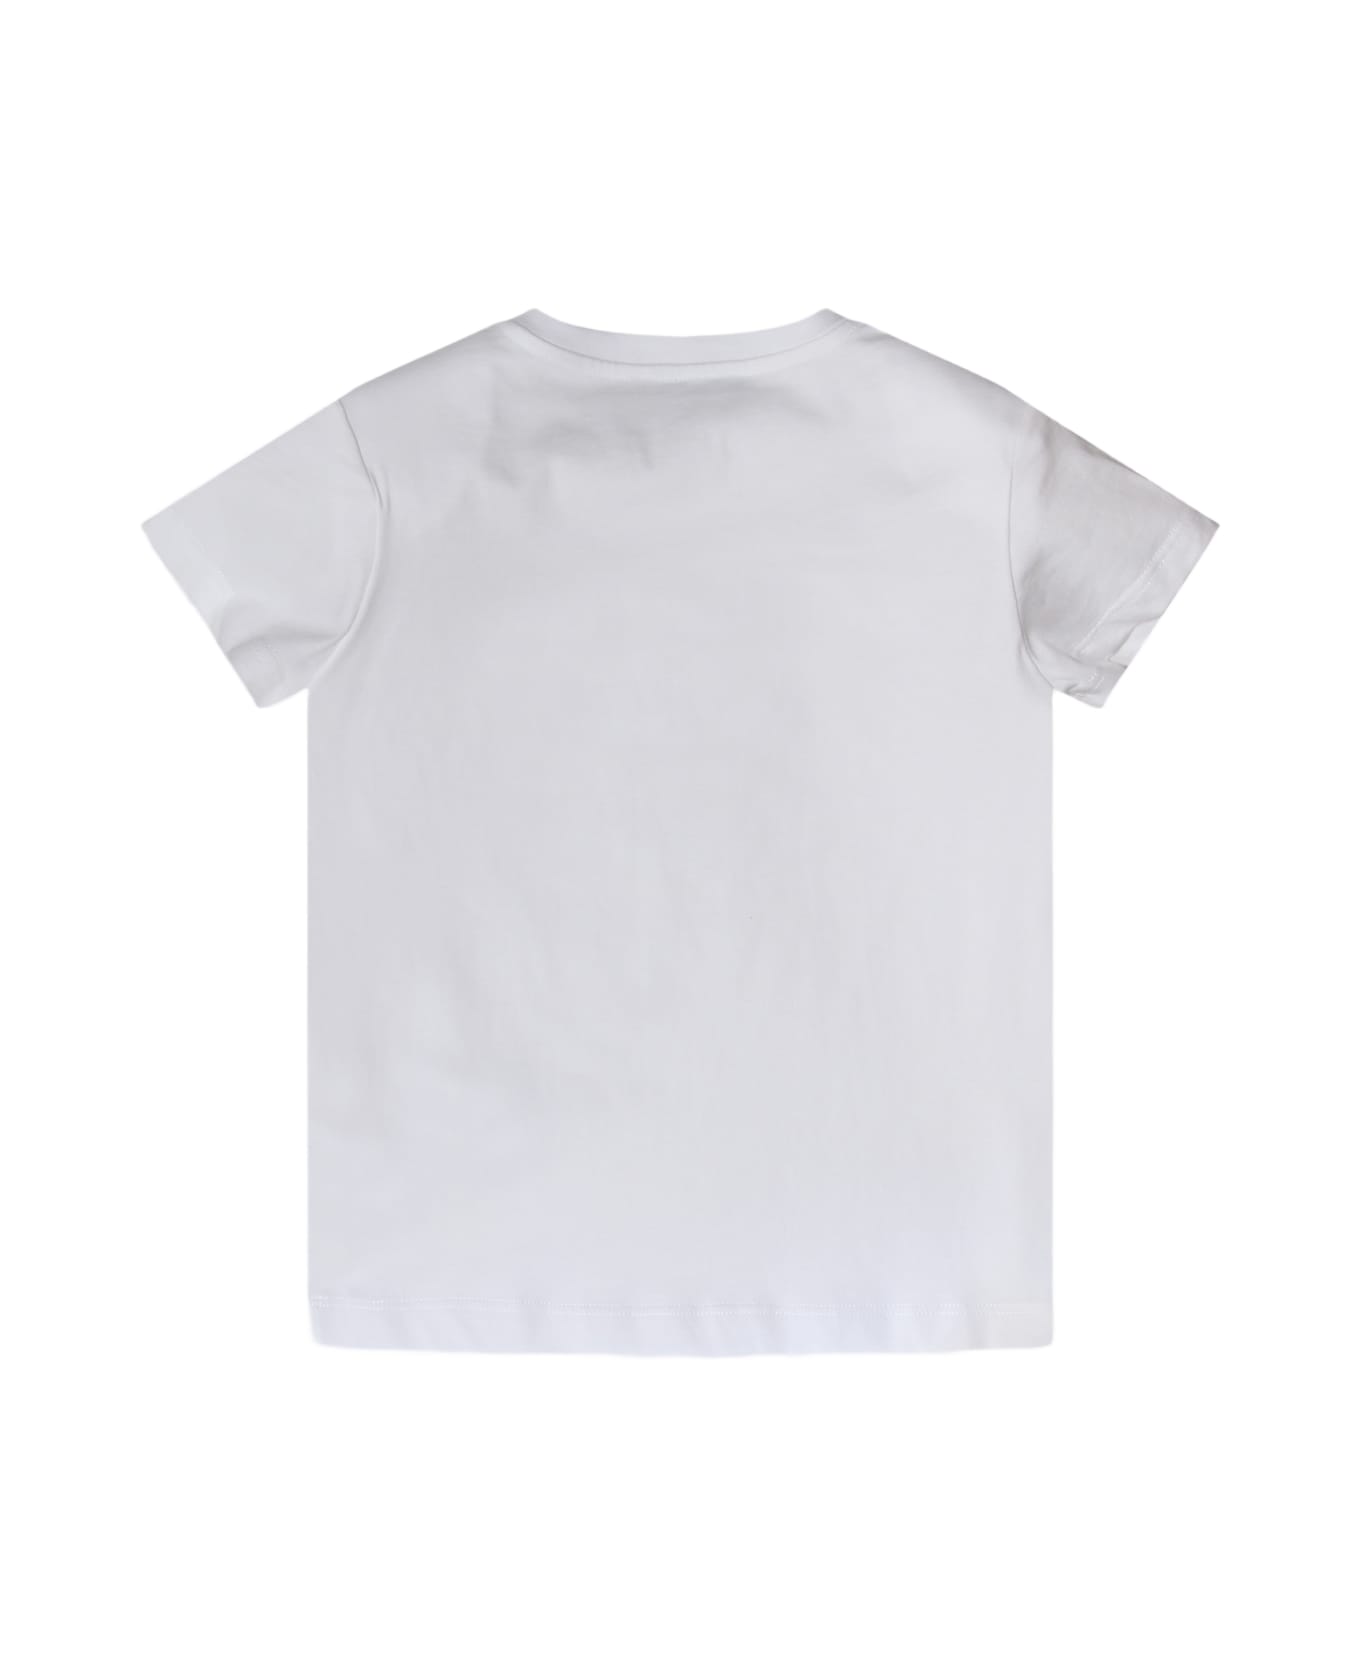 Balmain White And Gold Cotton T-shirt - White